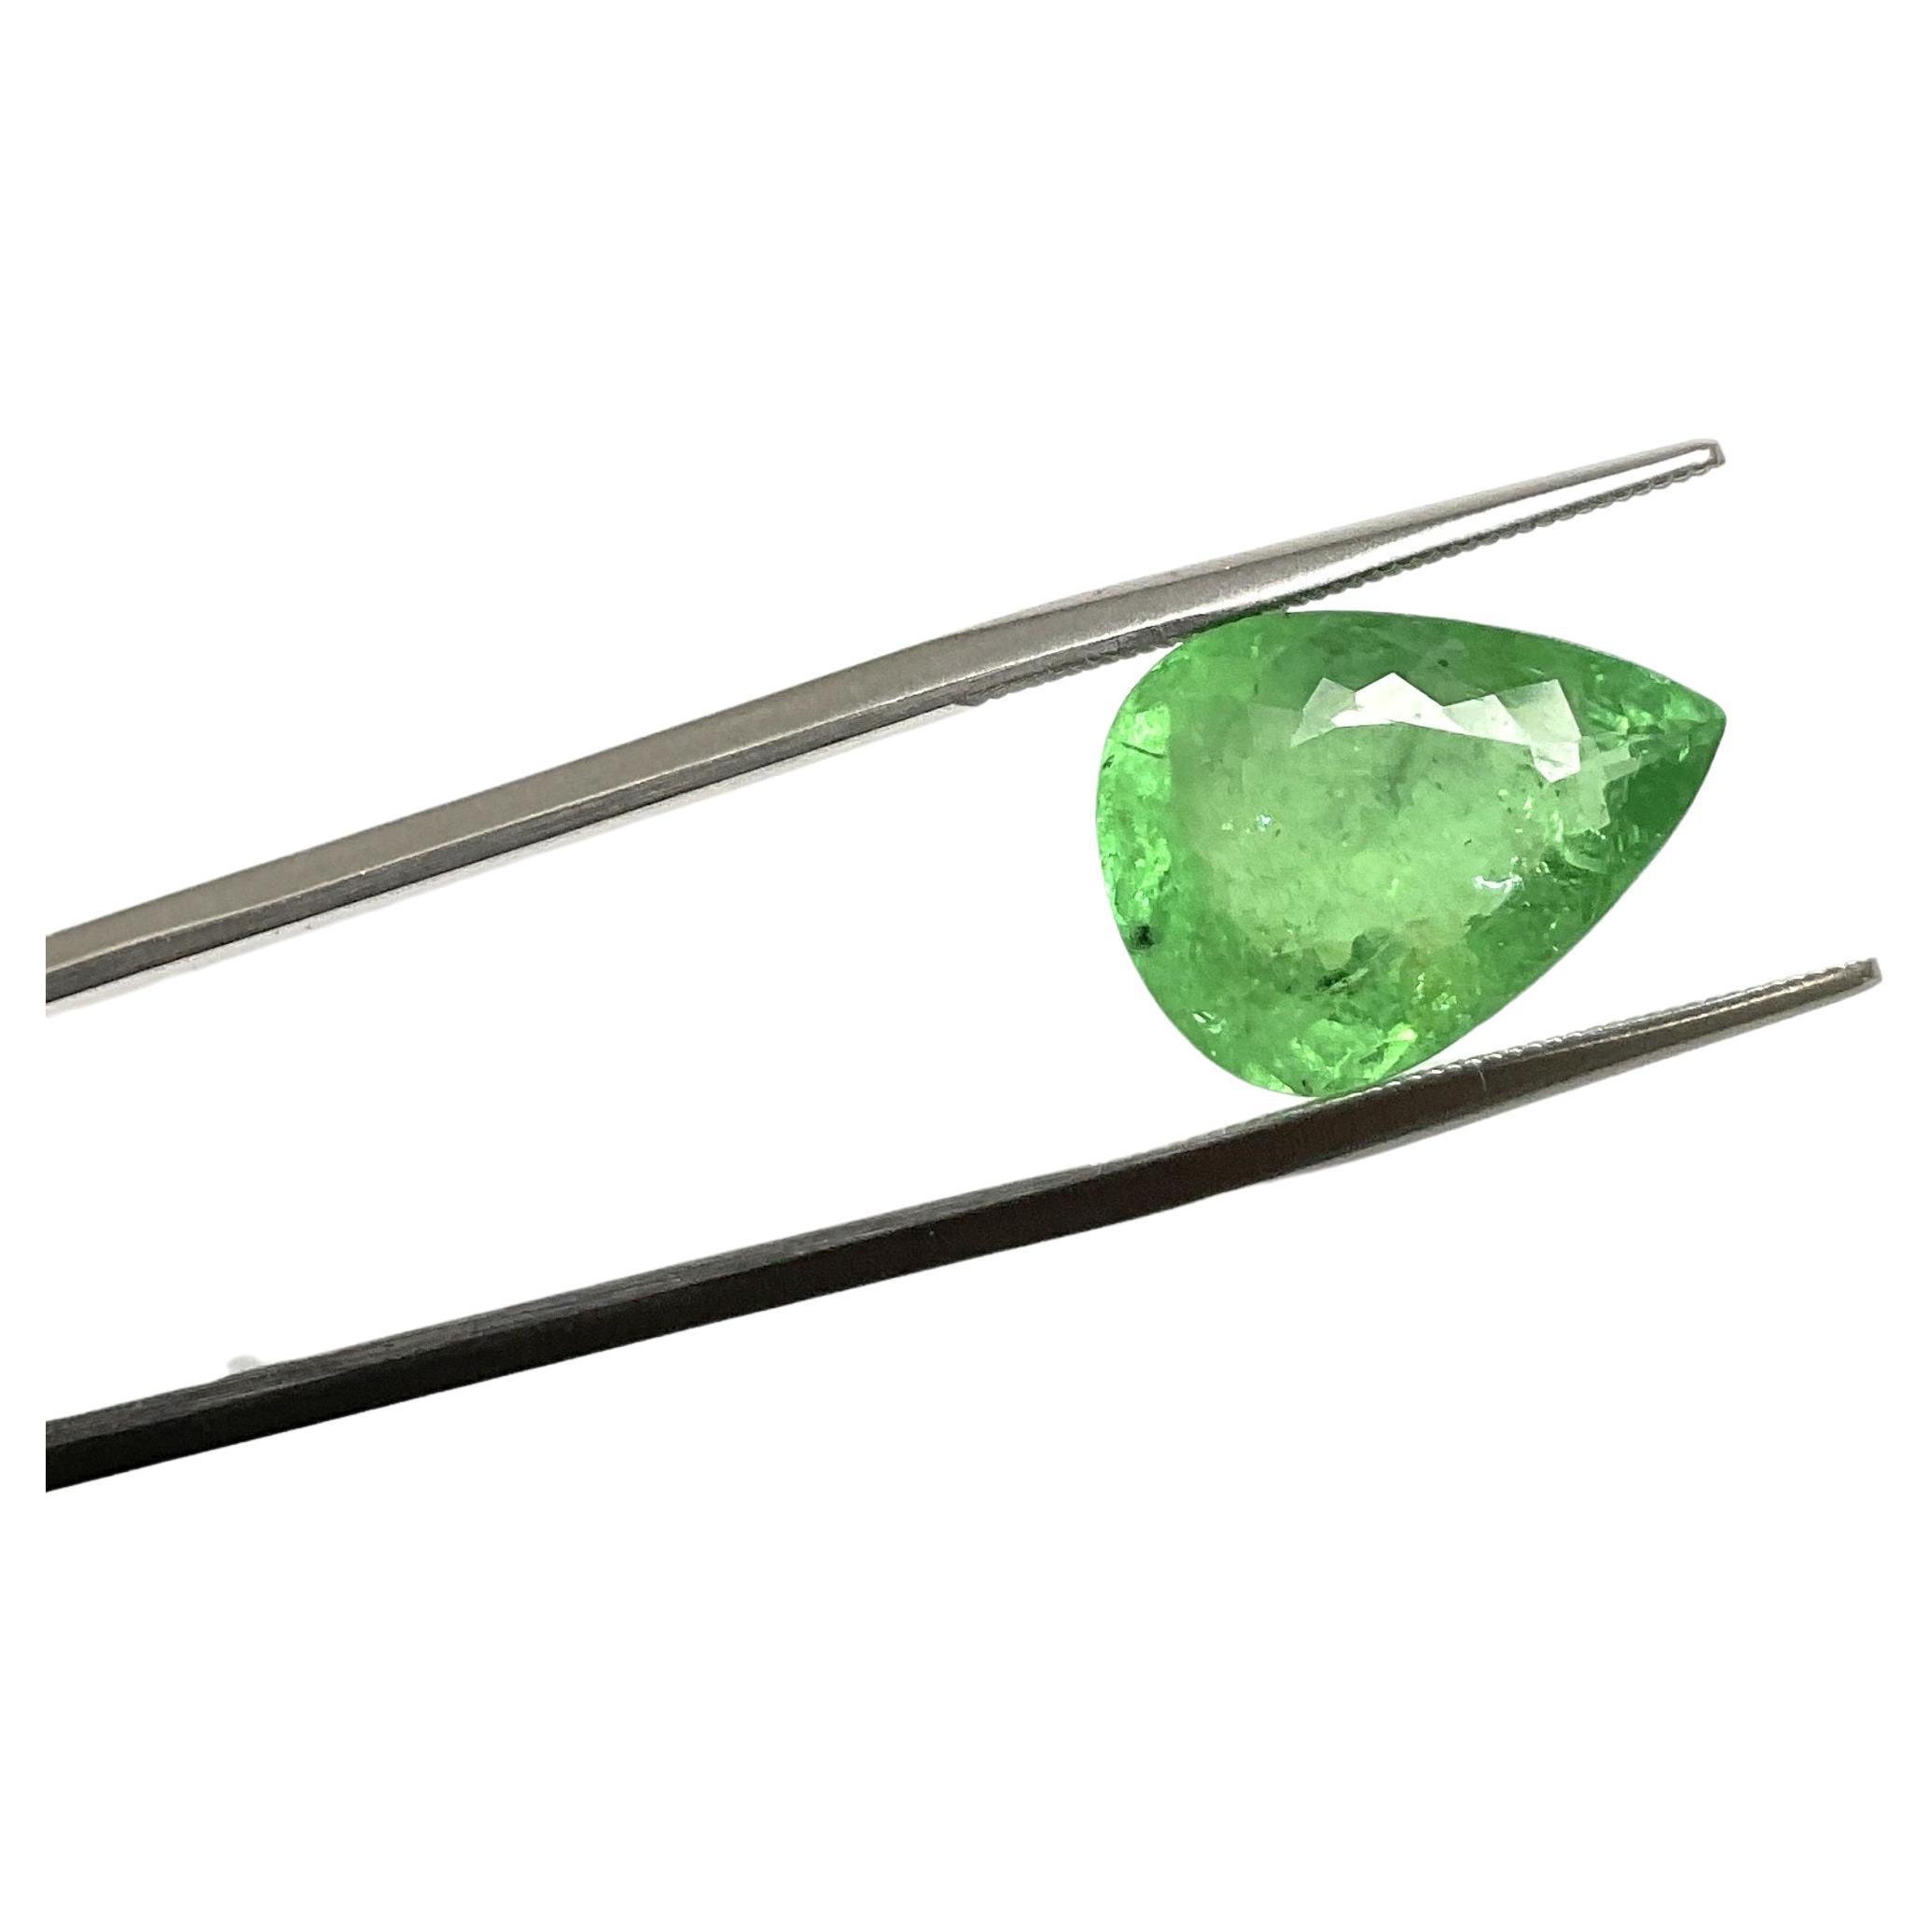 Certified 8.62 Carats Green Paraiba Tourmaline Pear Cut Stone for Fine Jewelry